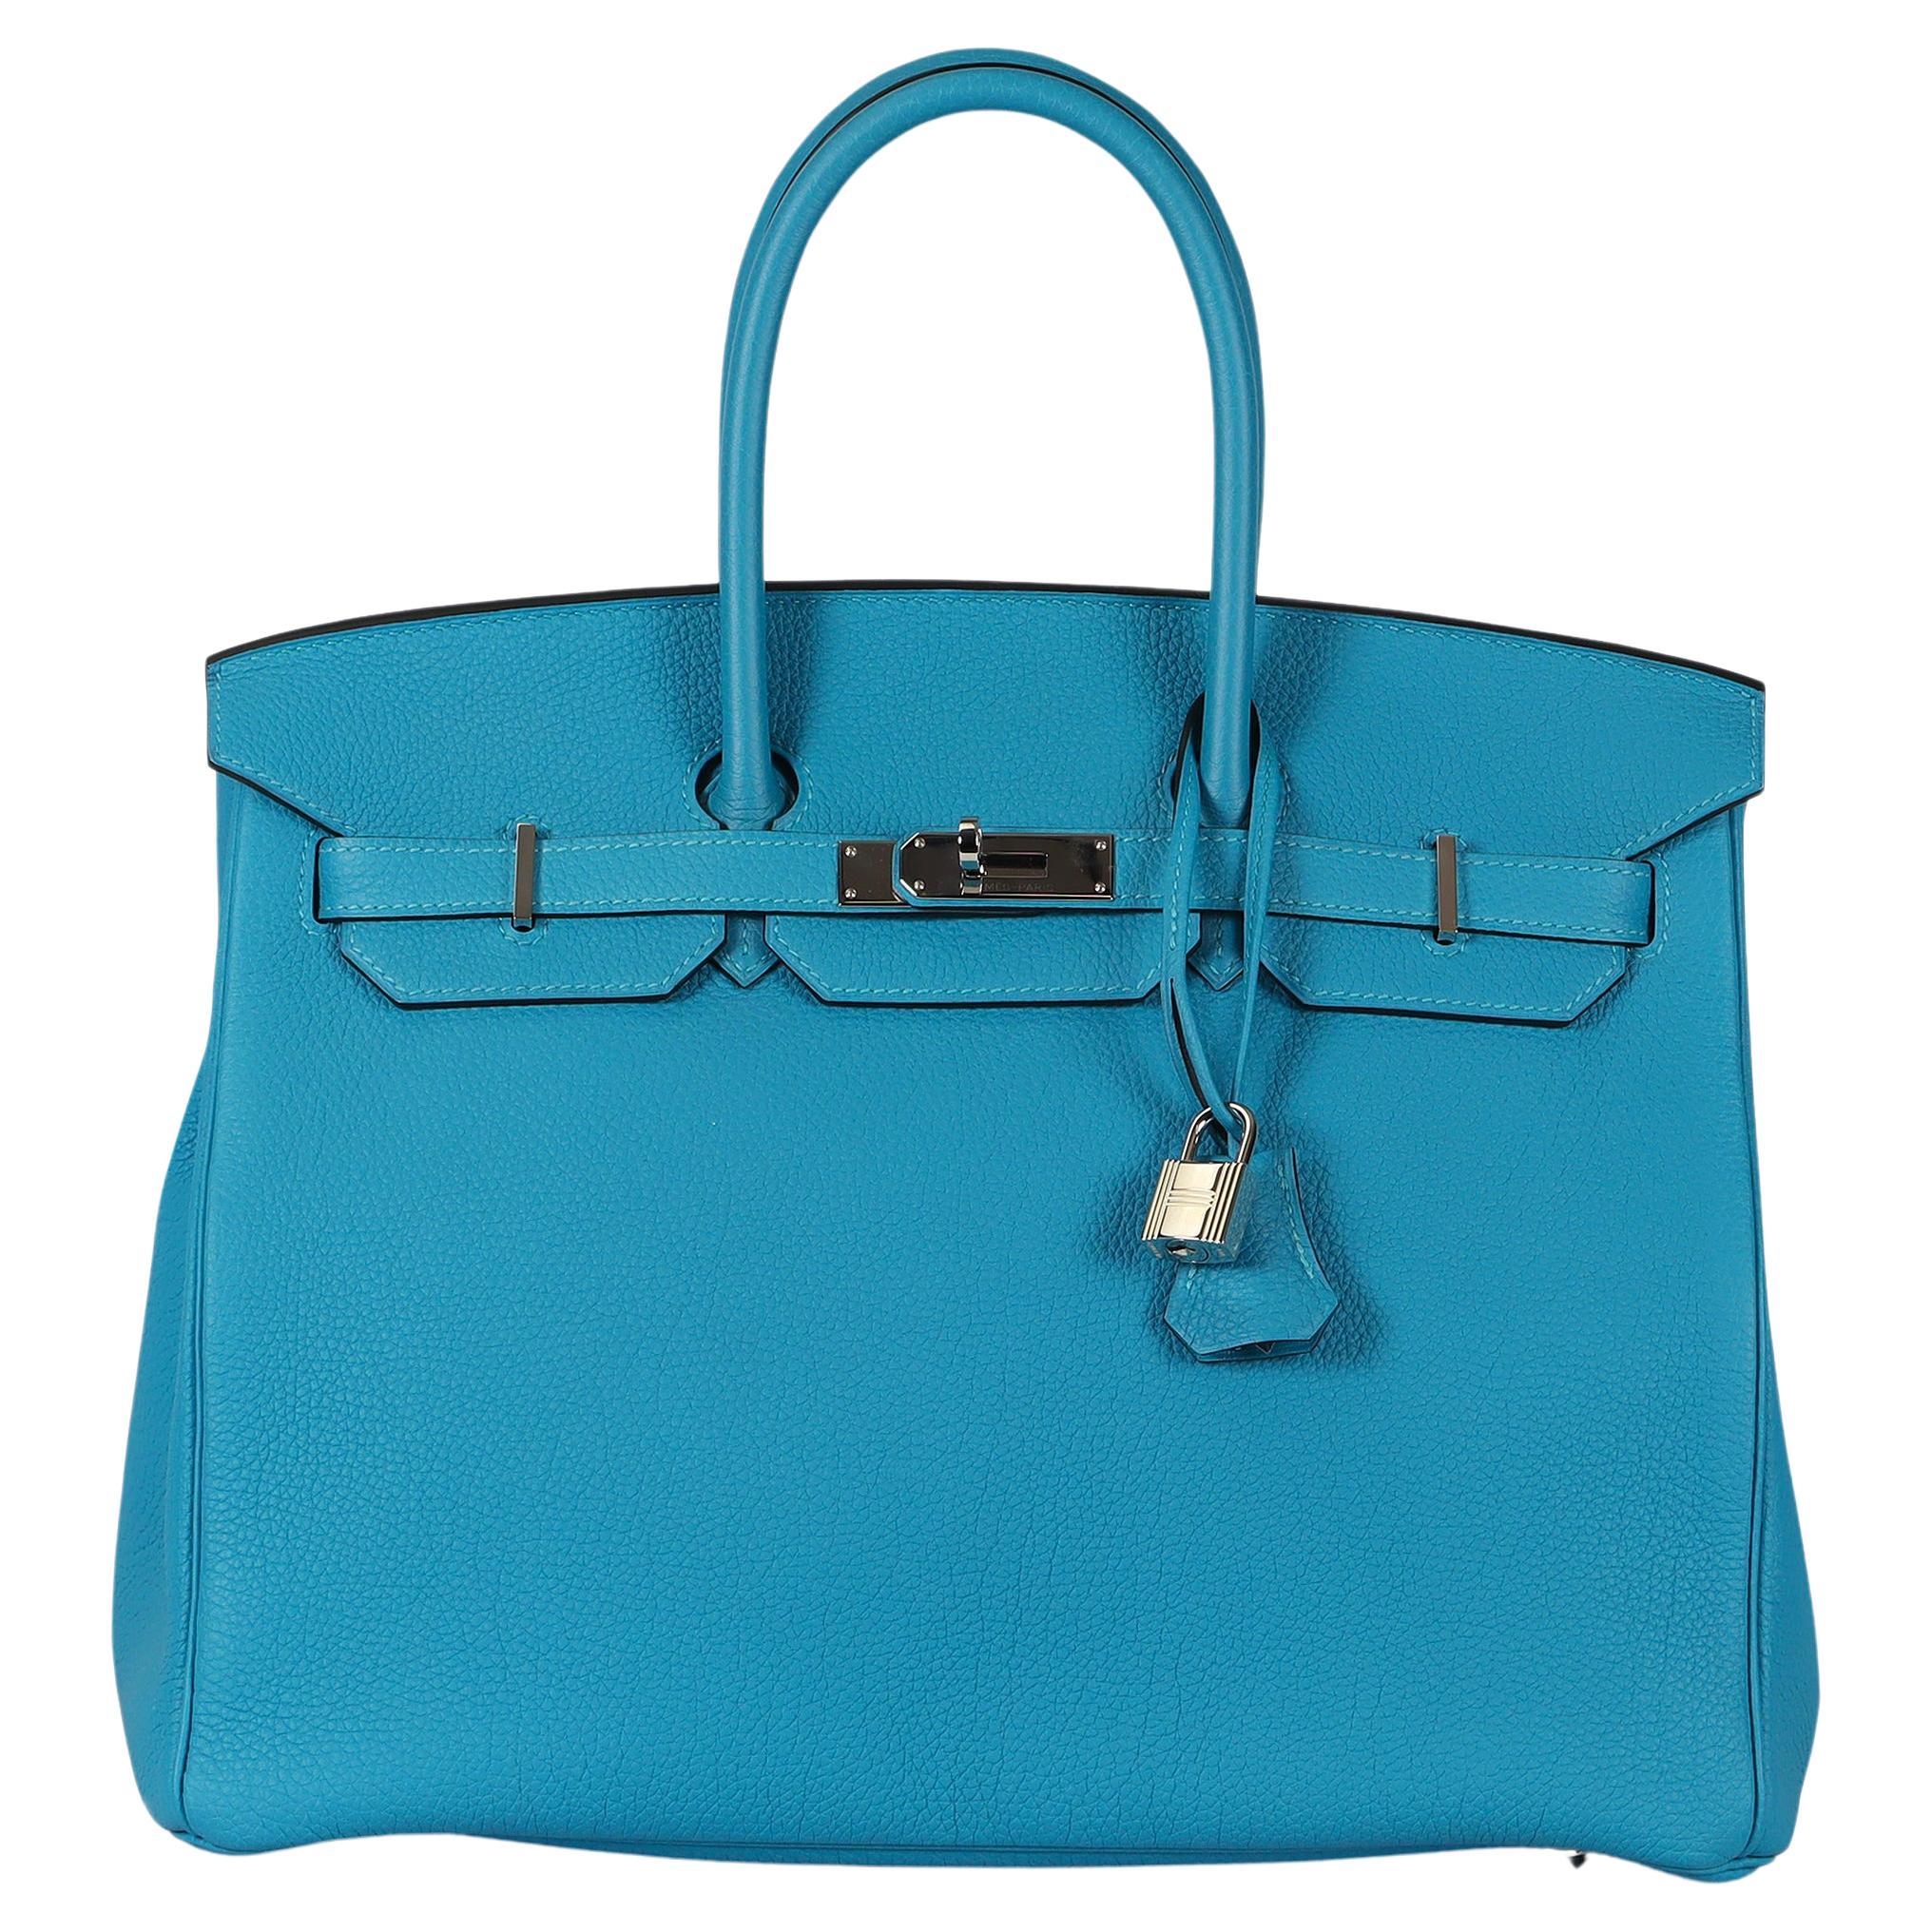 Hermès 2014 Birkin 35cm Togo Leather Bag en vente